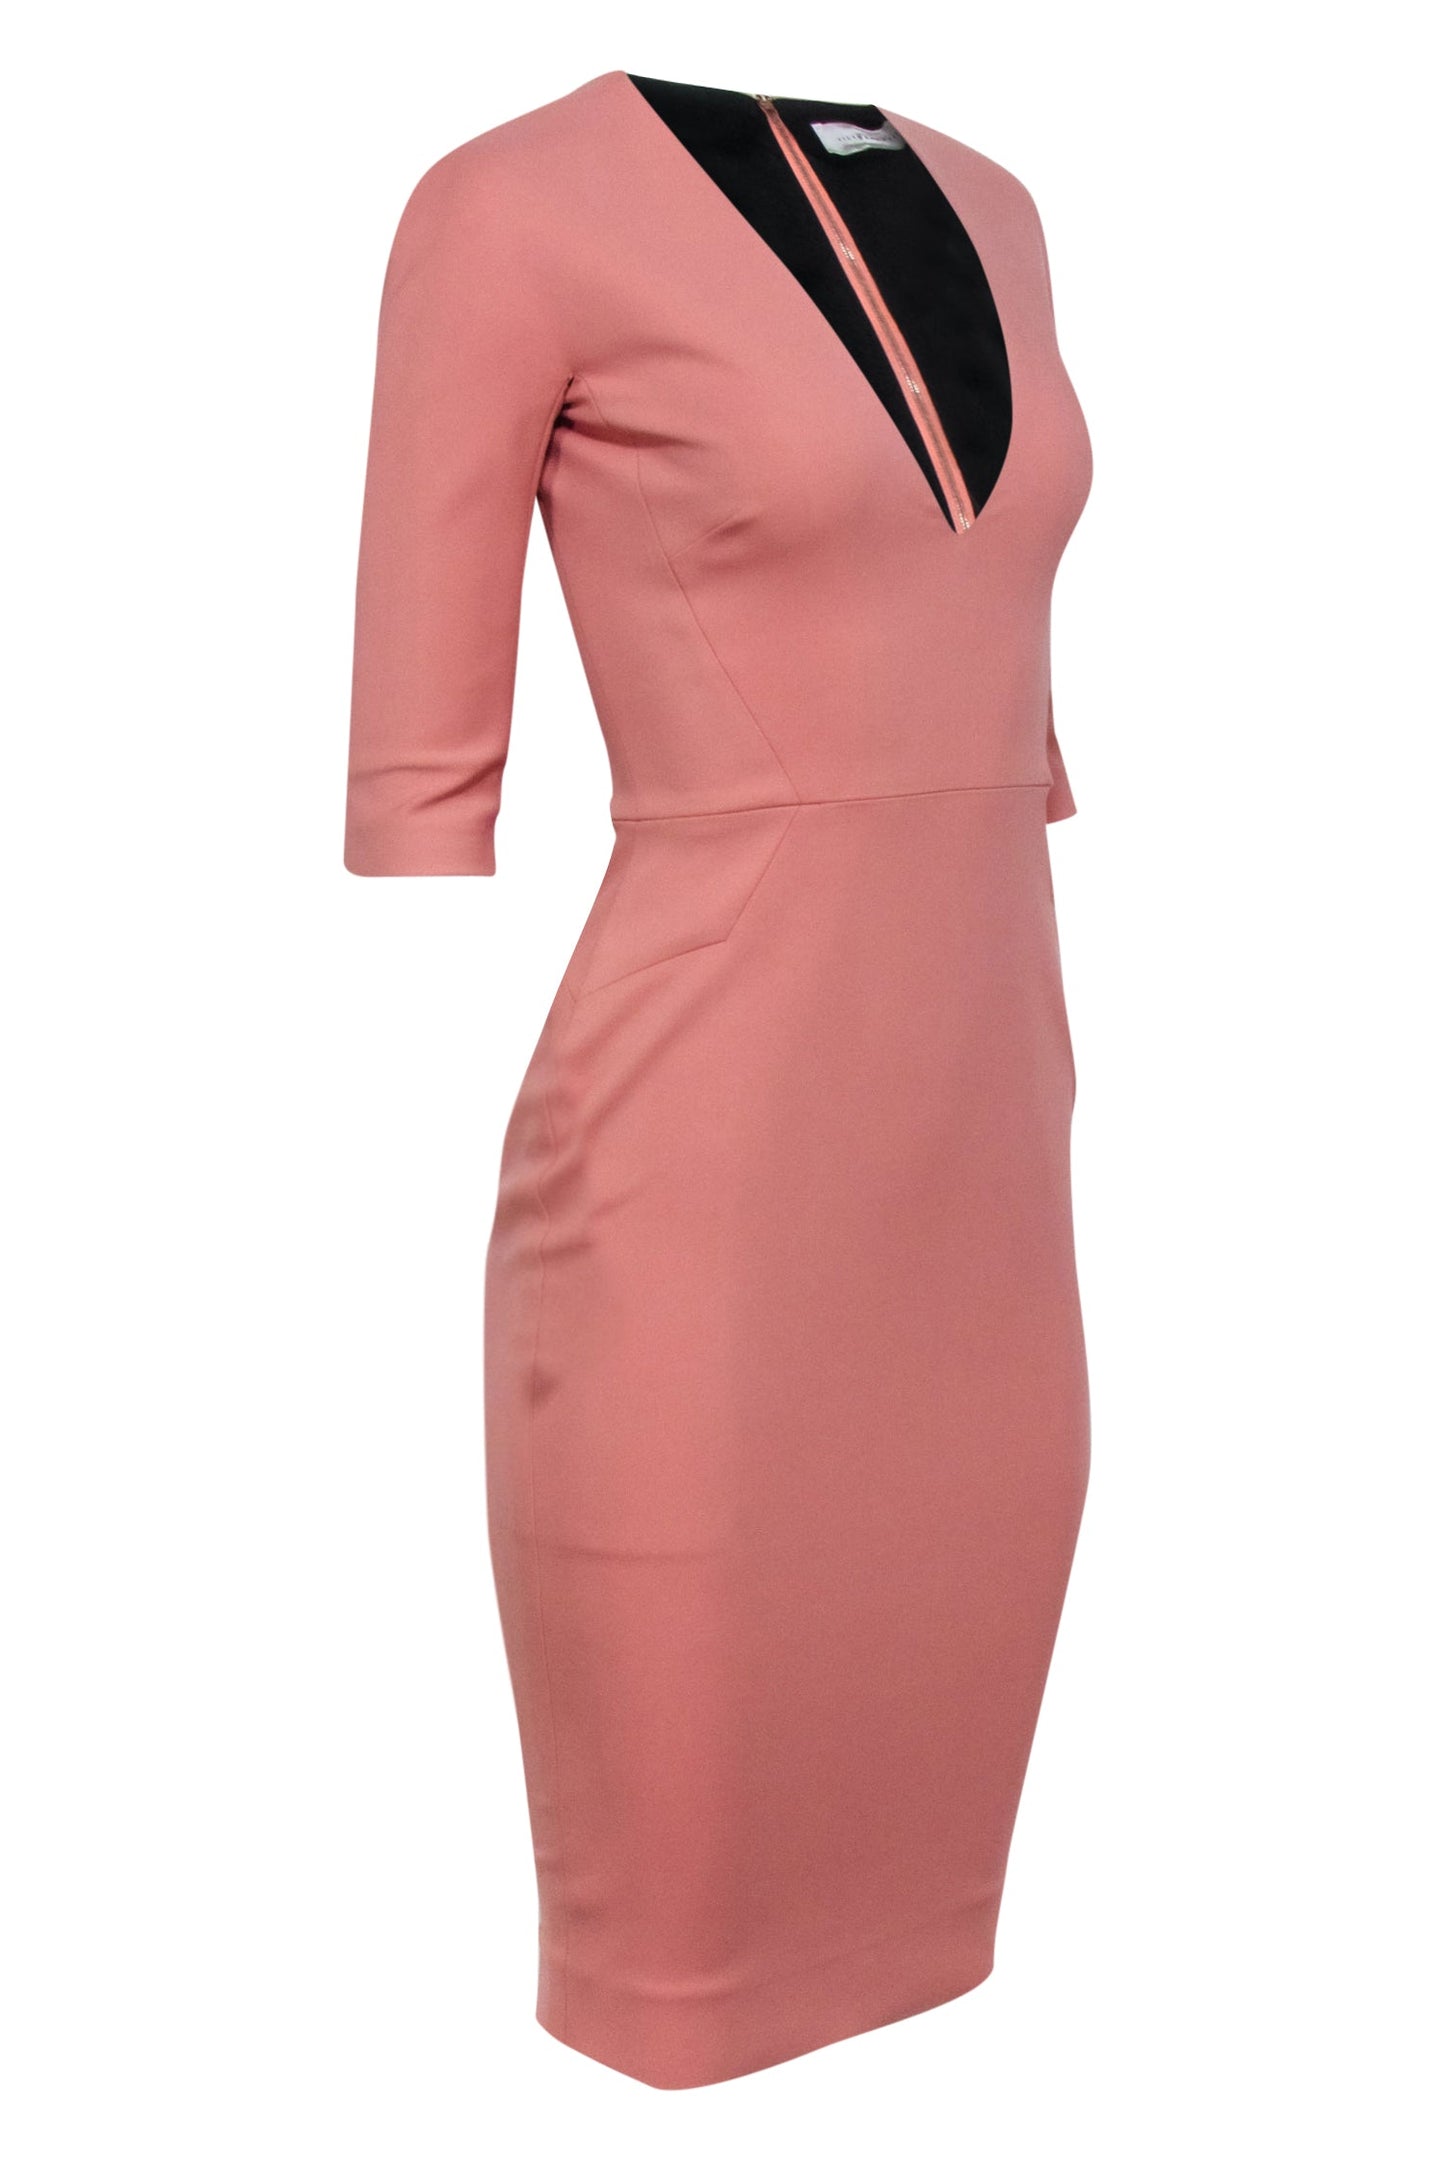 Victoria Beckham - Pink Cropped Sleeve V-neckline Dress Sz 4